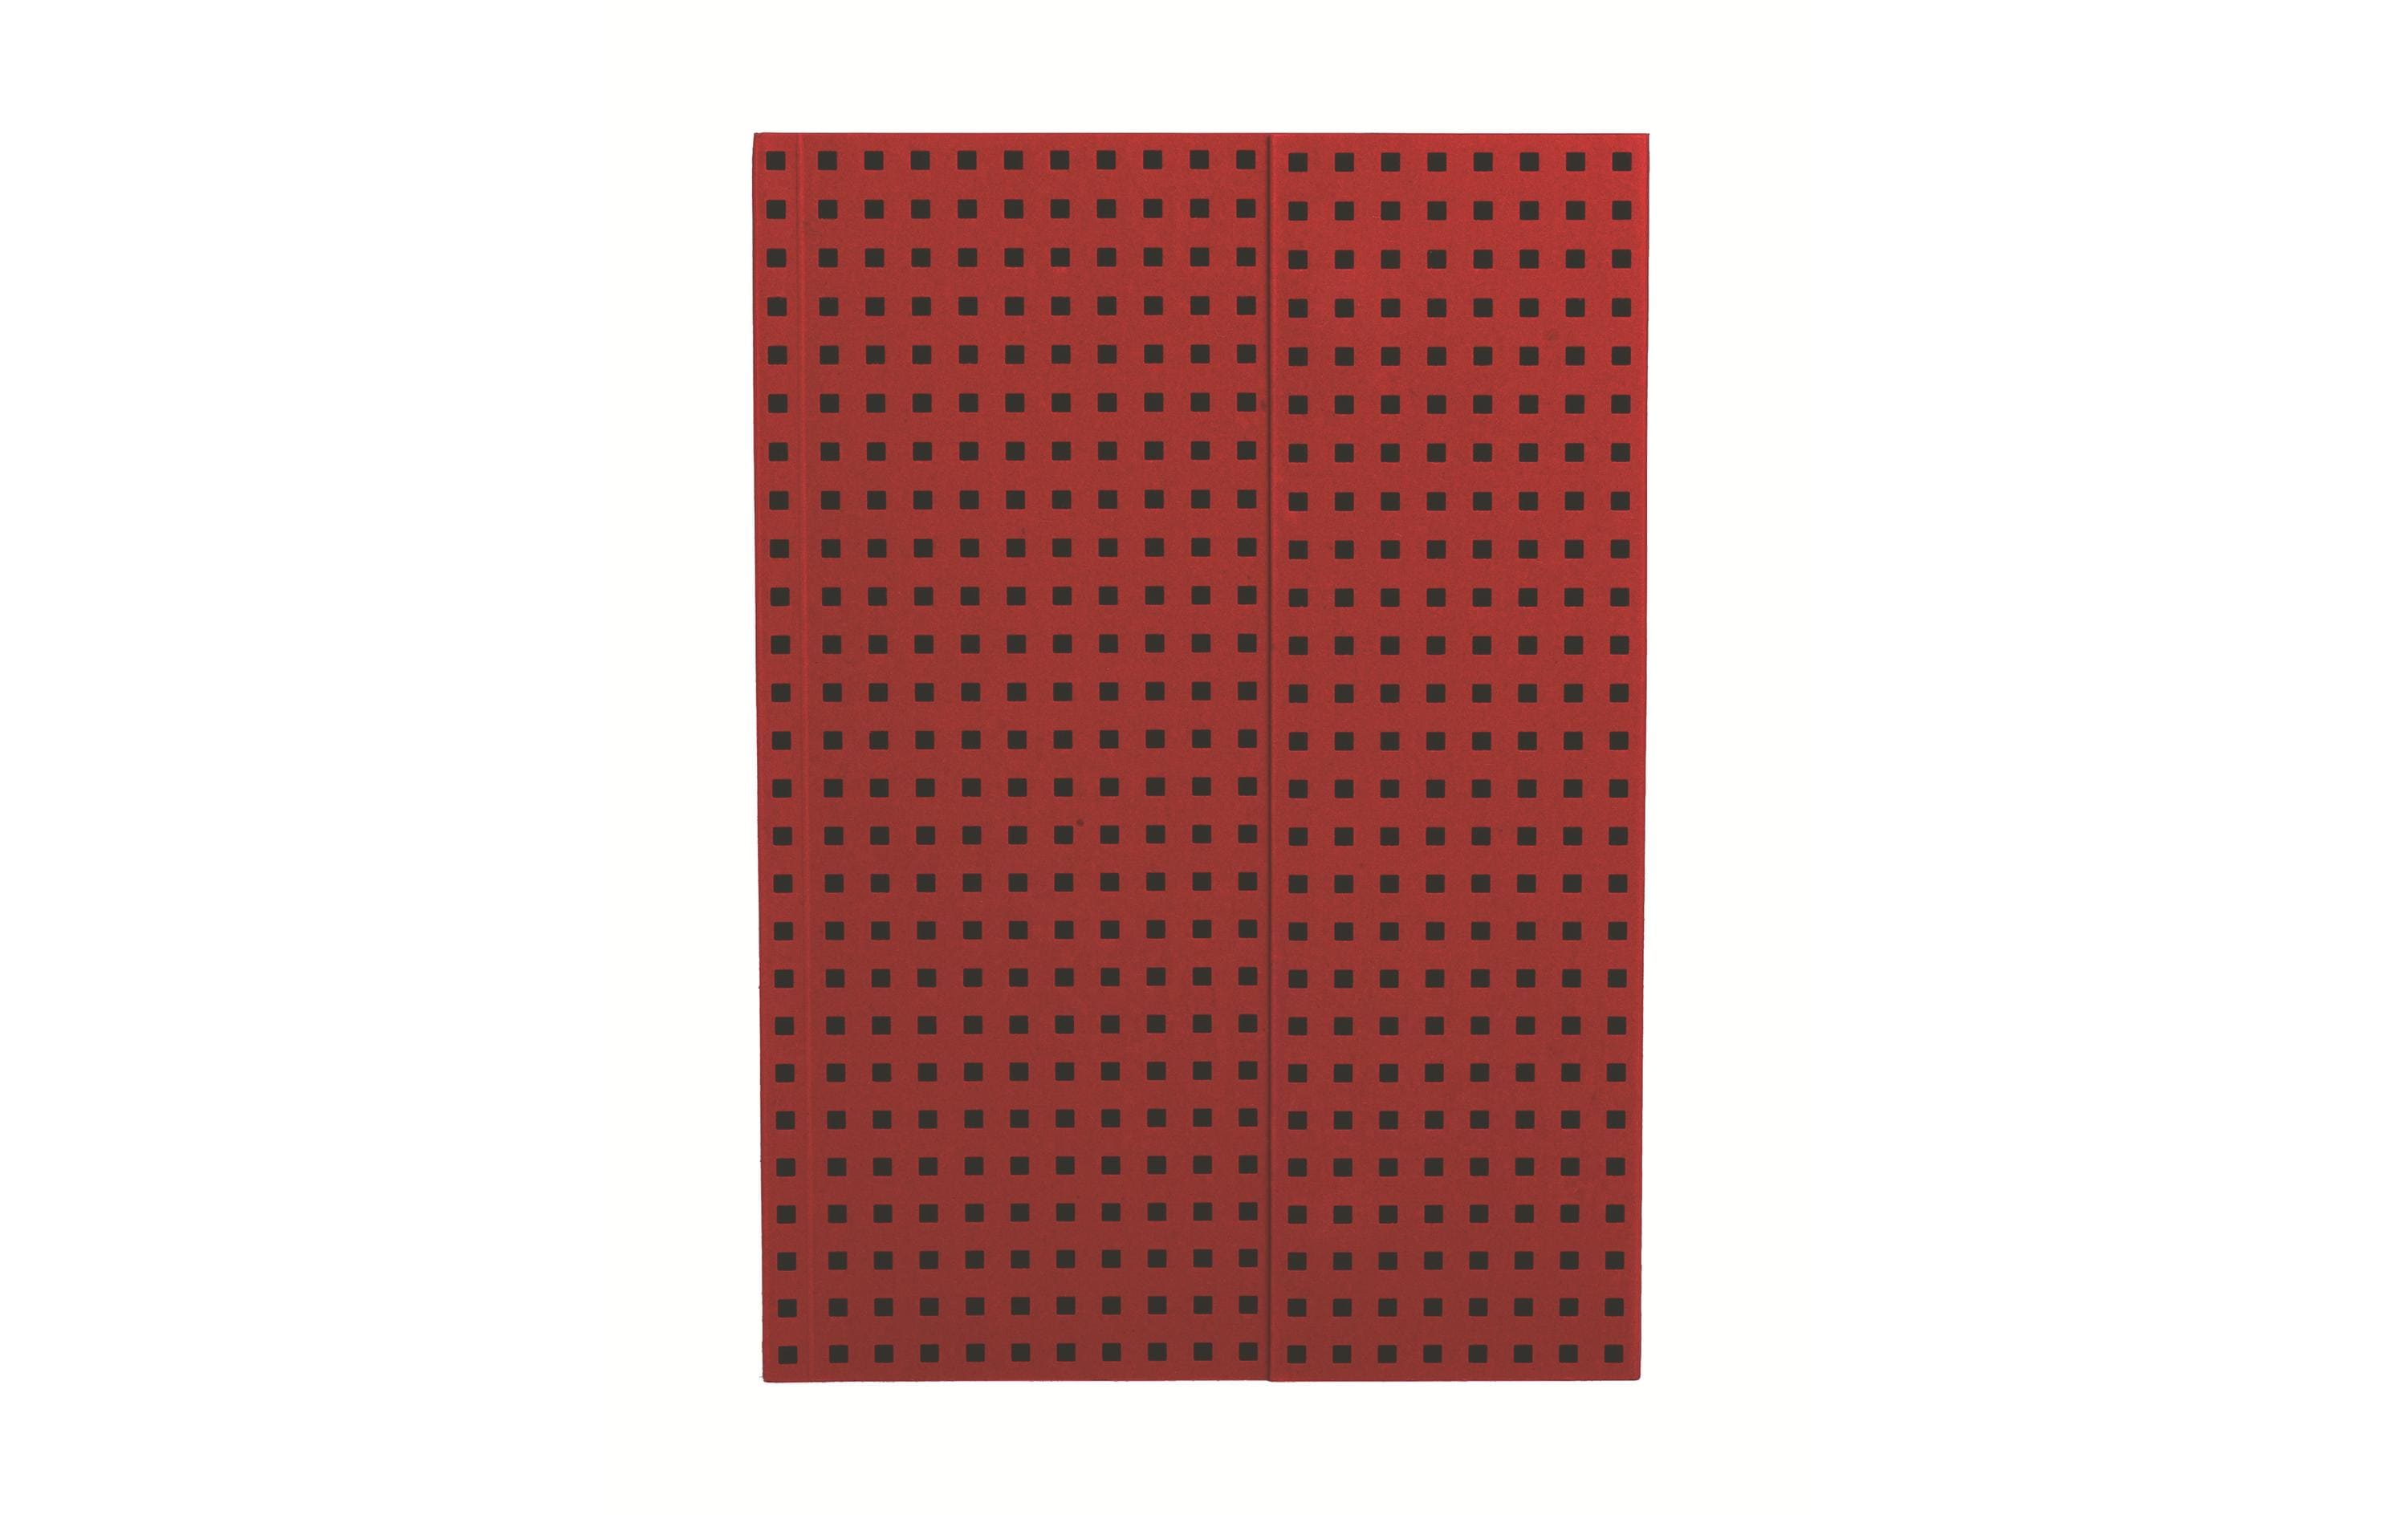 PaperOh Notizbuch Quadro B5, Blanko, Rot mit schwarzen Quadraten